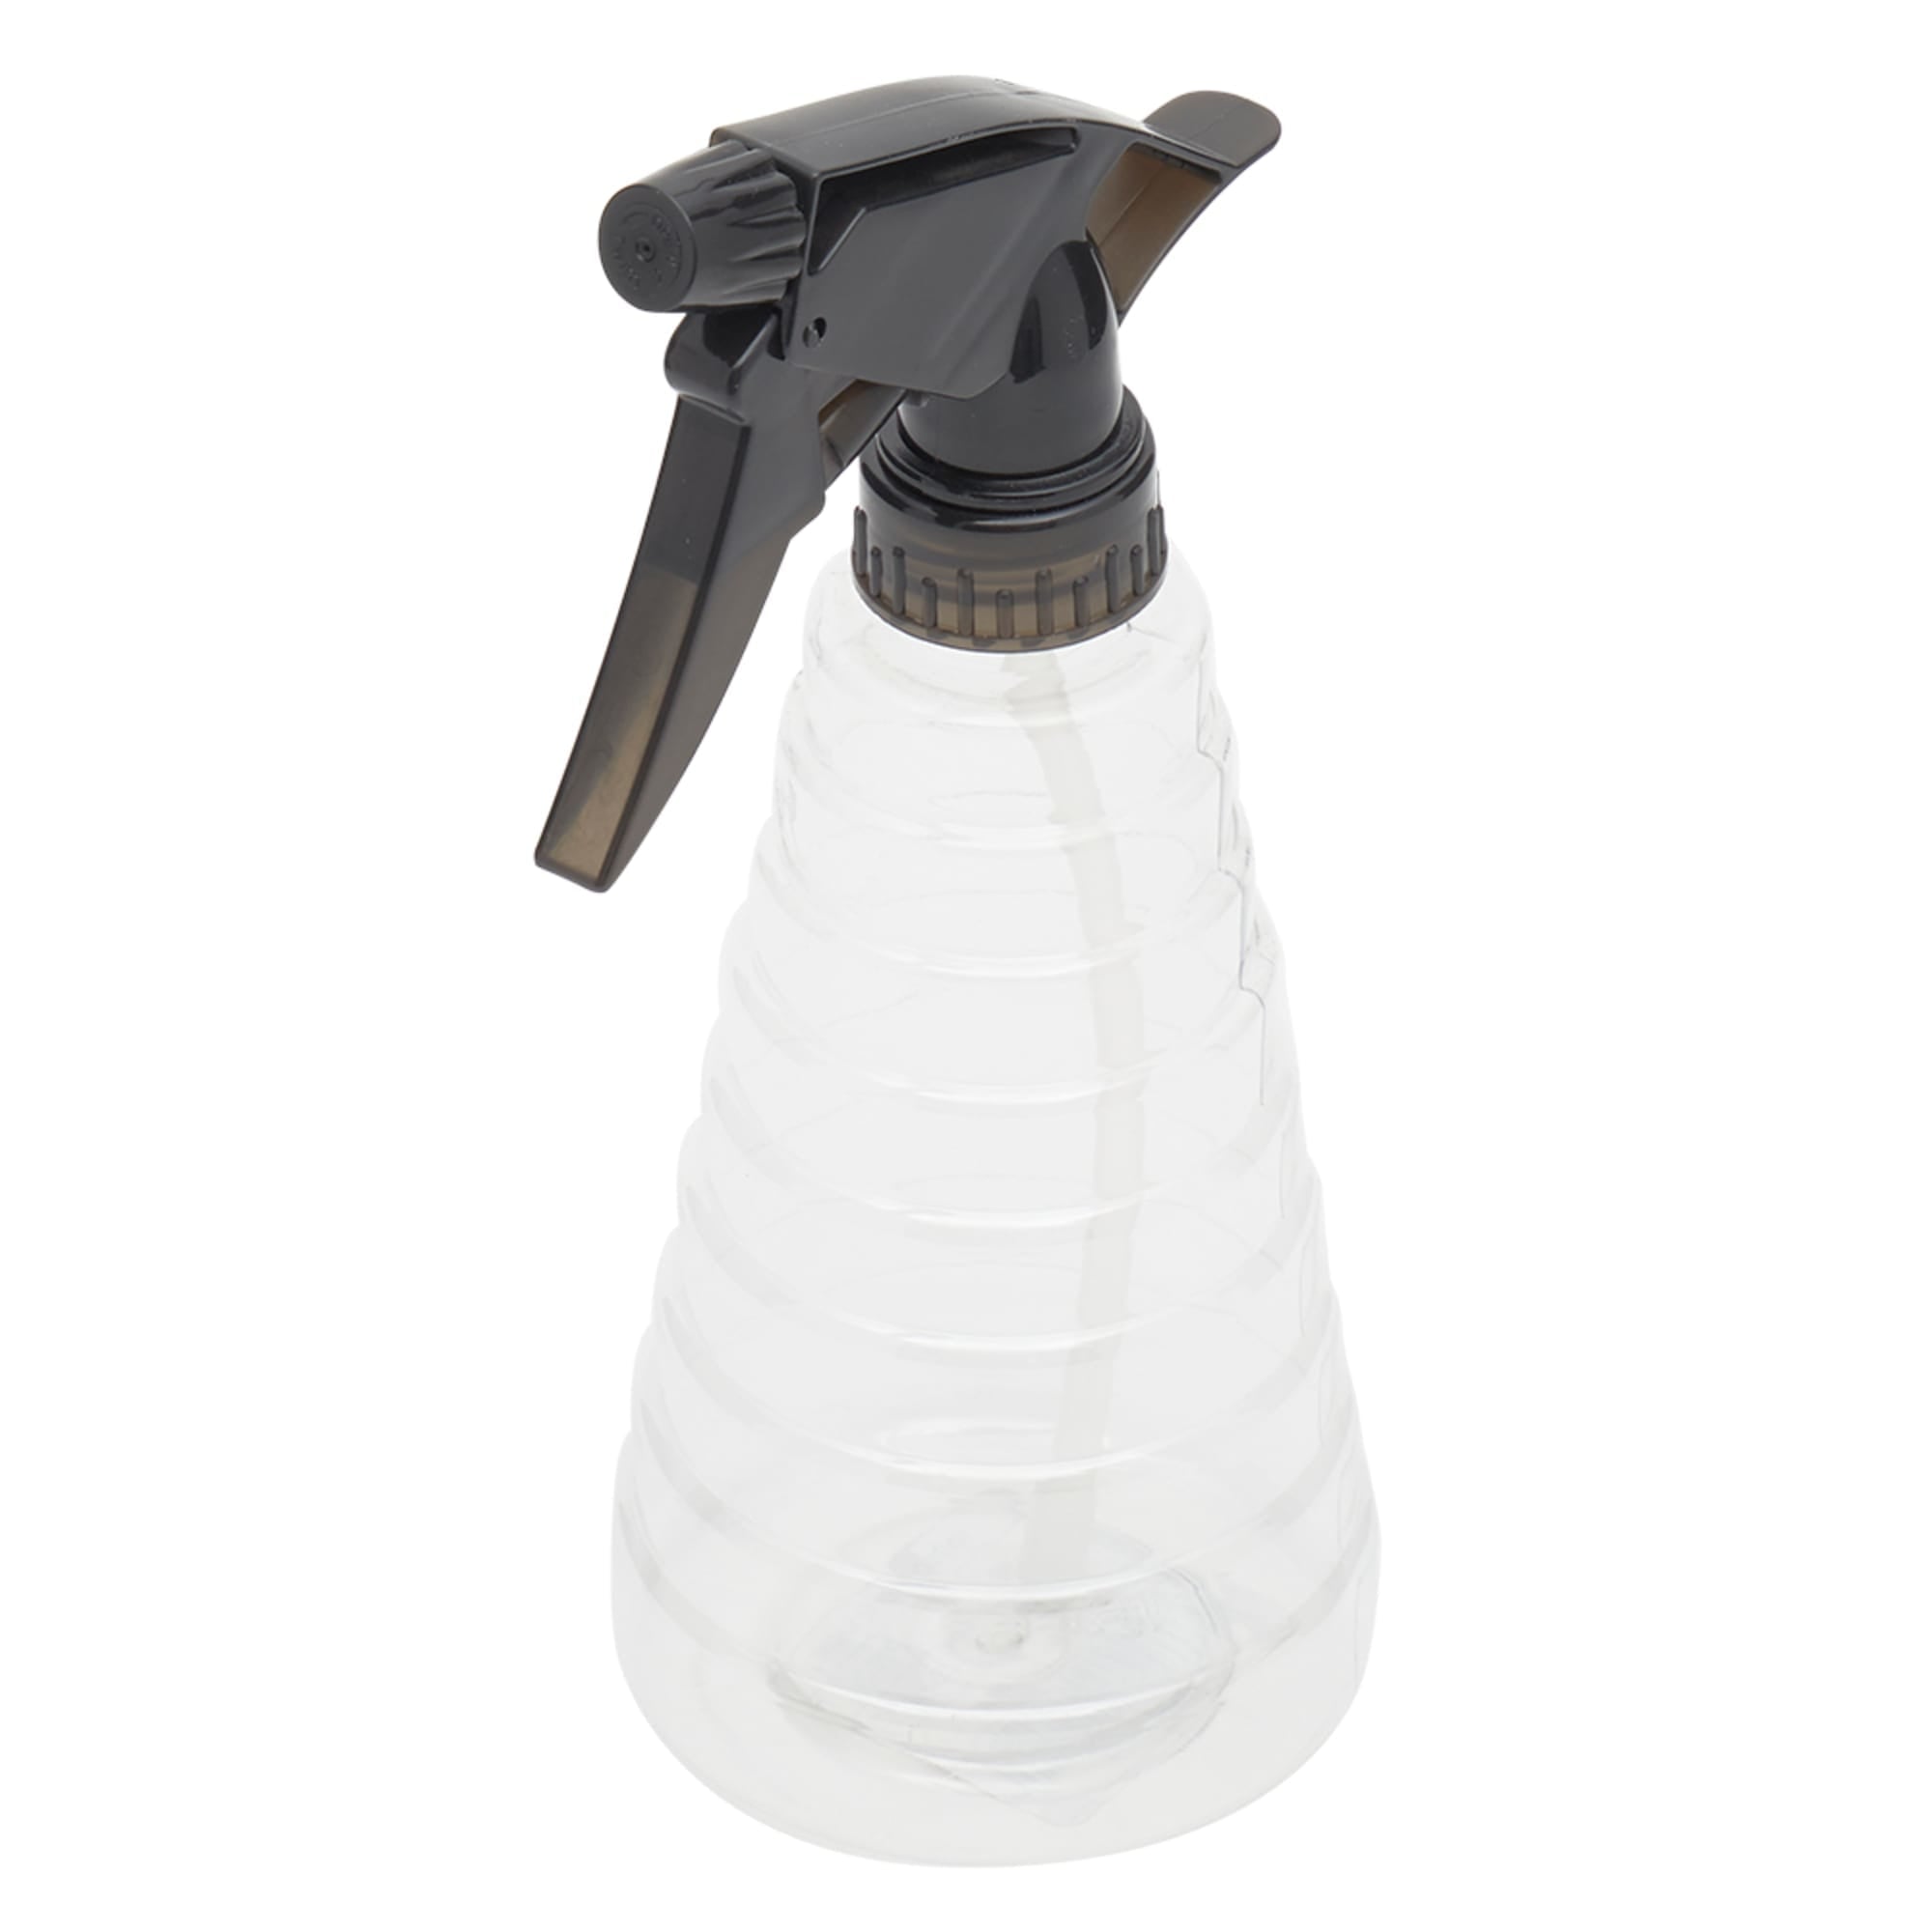 Home Basics 16 oz Spray Bottle, Clear $1.00 EACH, CASE PACK OF 24